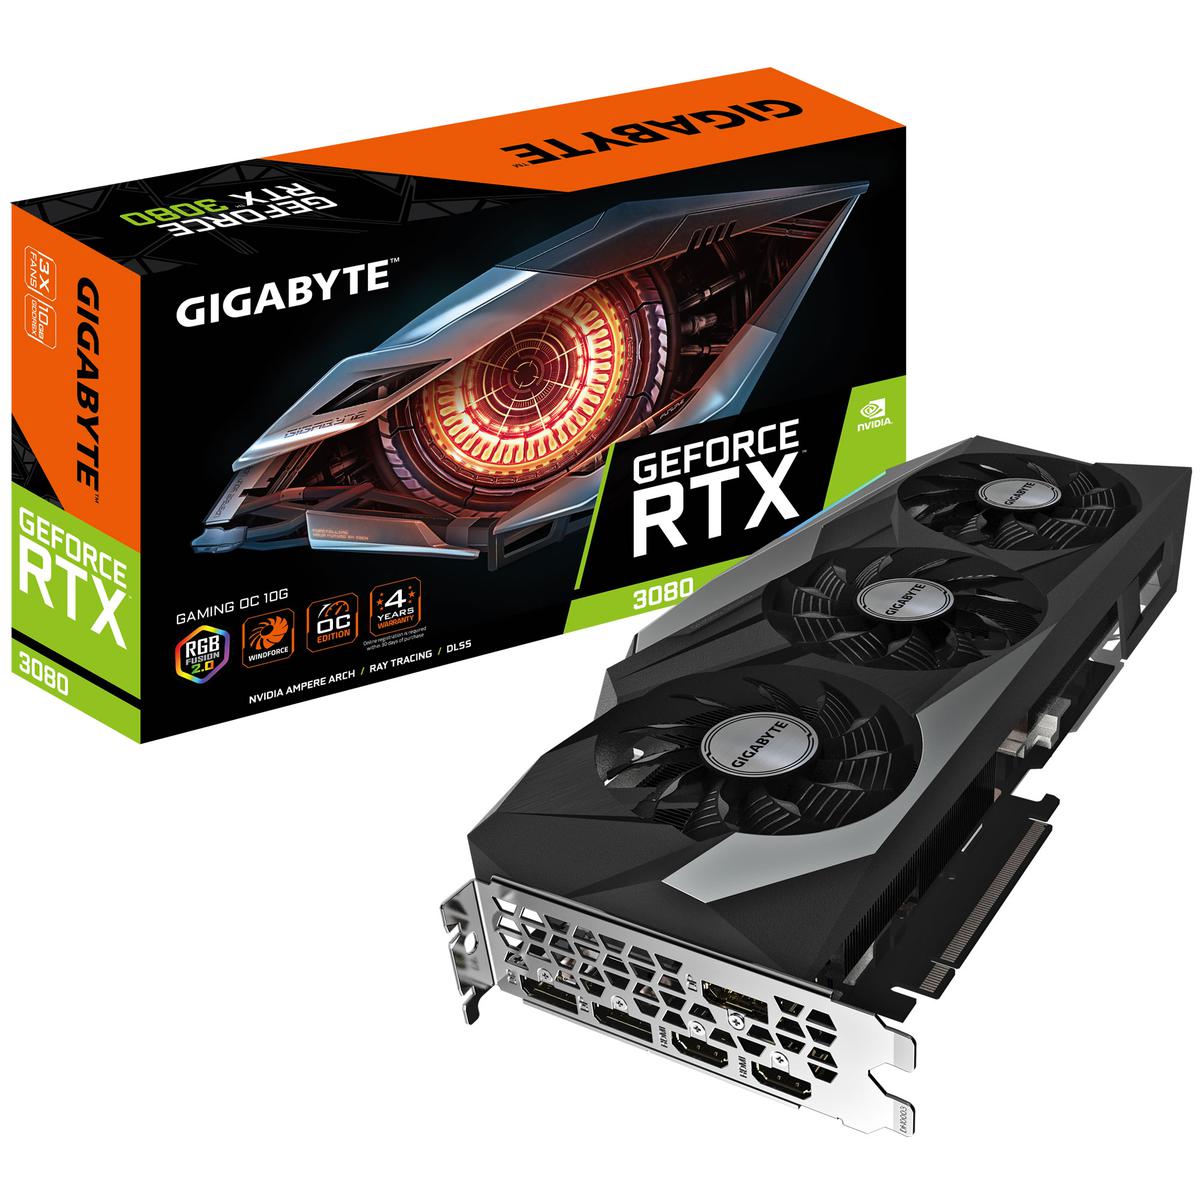 Gigabyte GeForce RTX 3080 10 GB Gaming